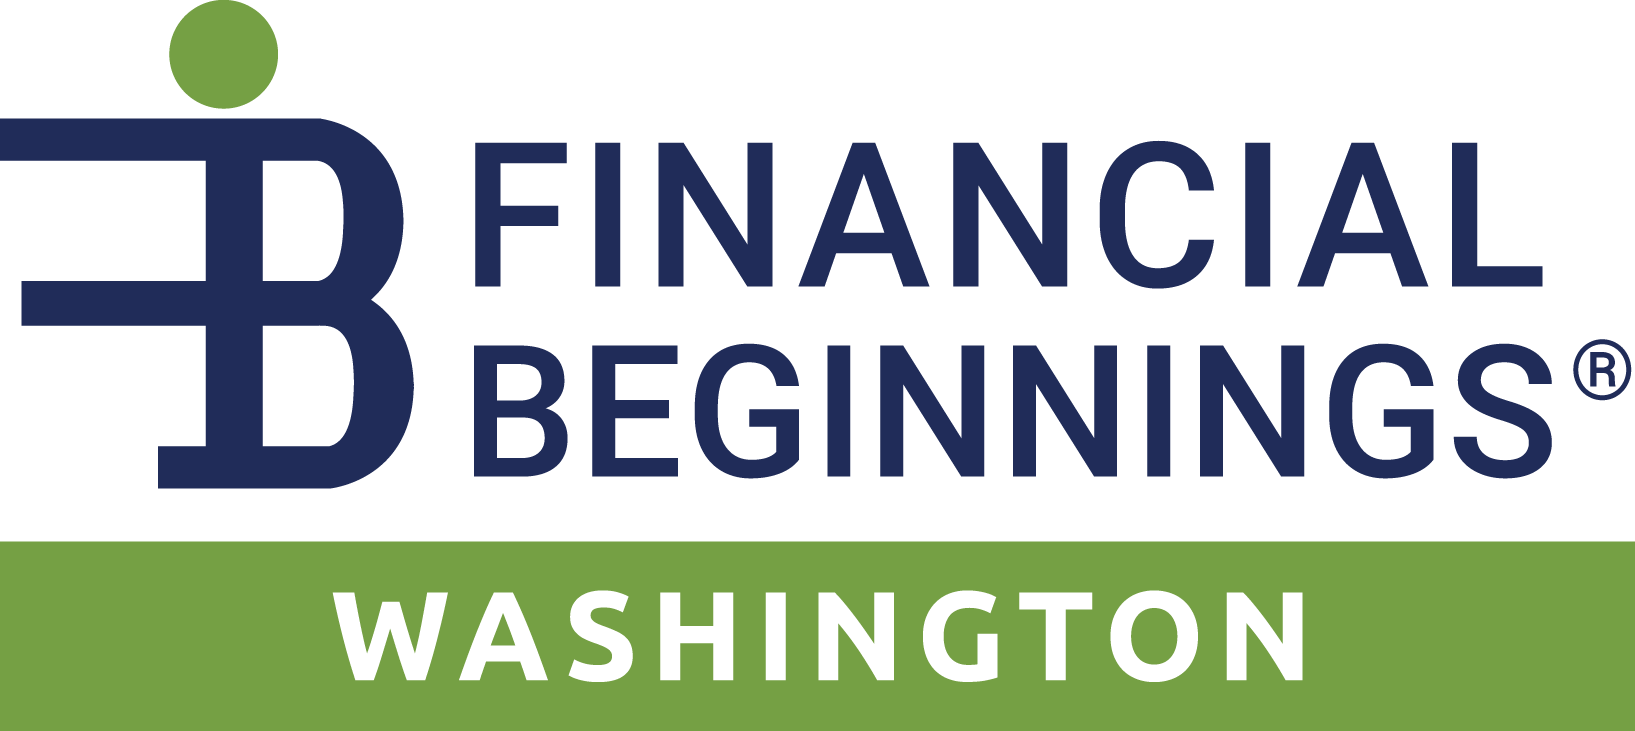 Financial Beginnings Washington